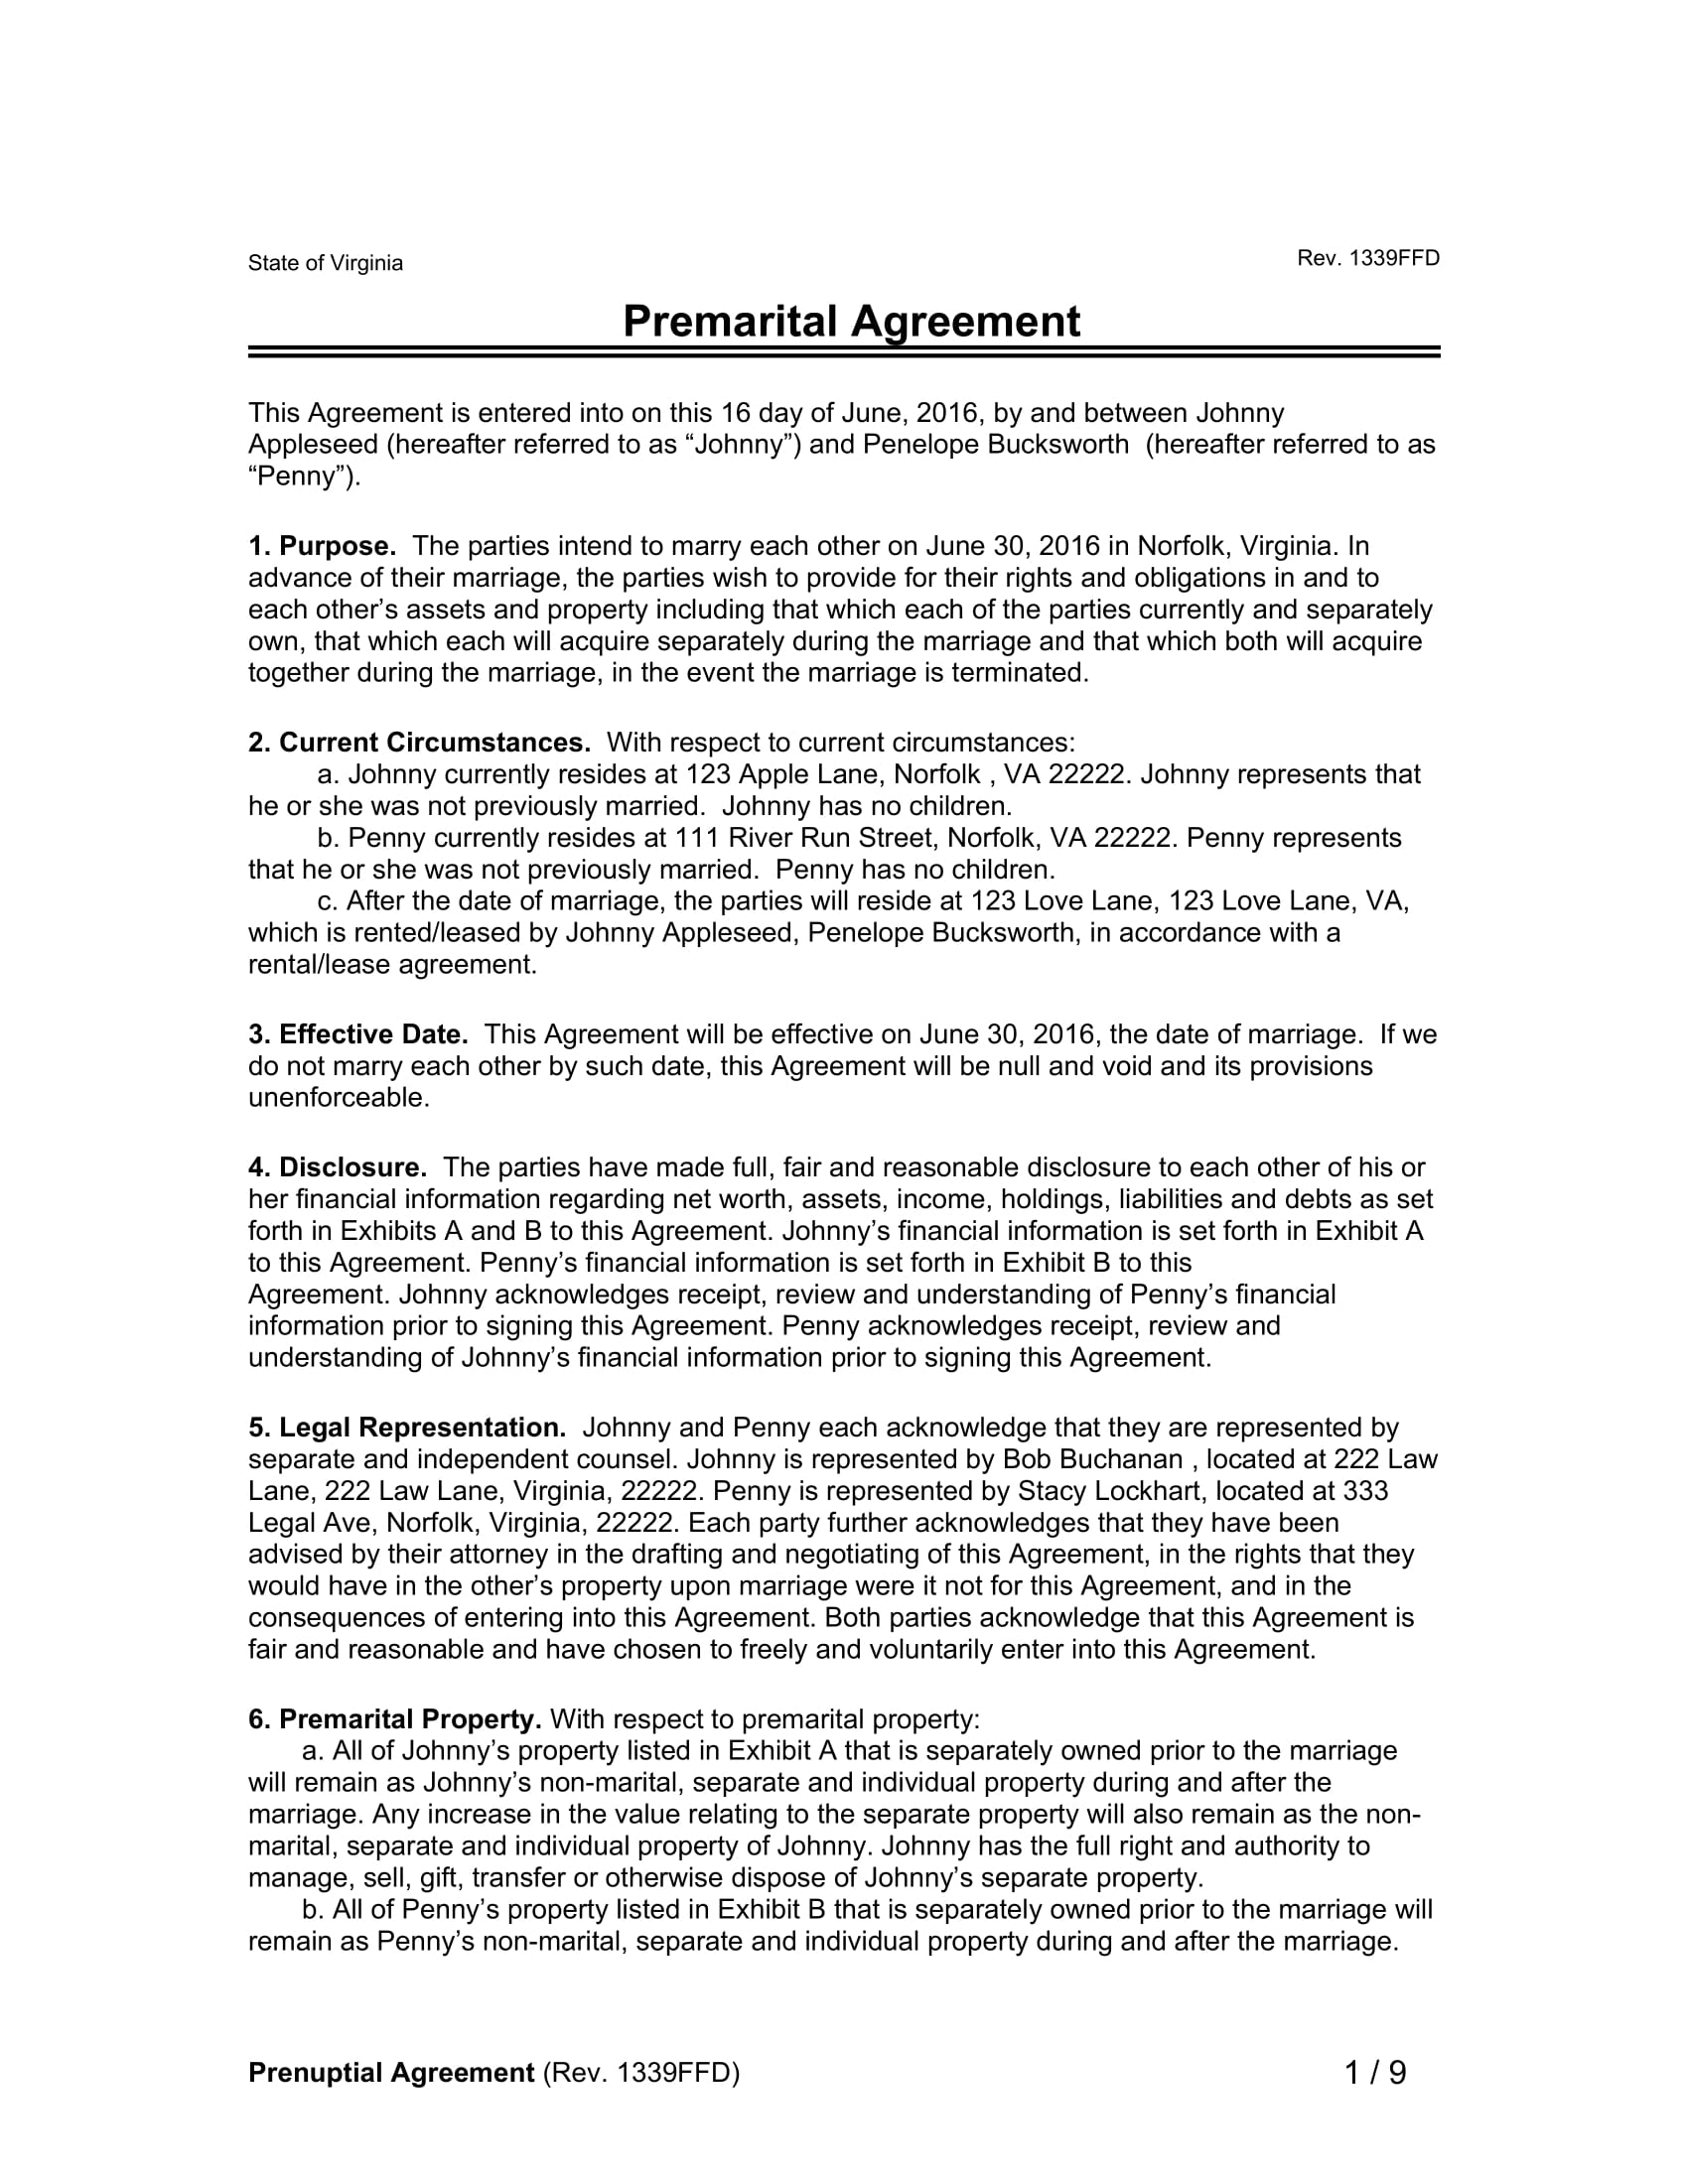 Prenuptial Agreement Form Pdf Premarital Contract Forms Pdf Doc